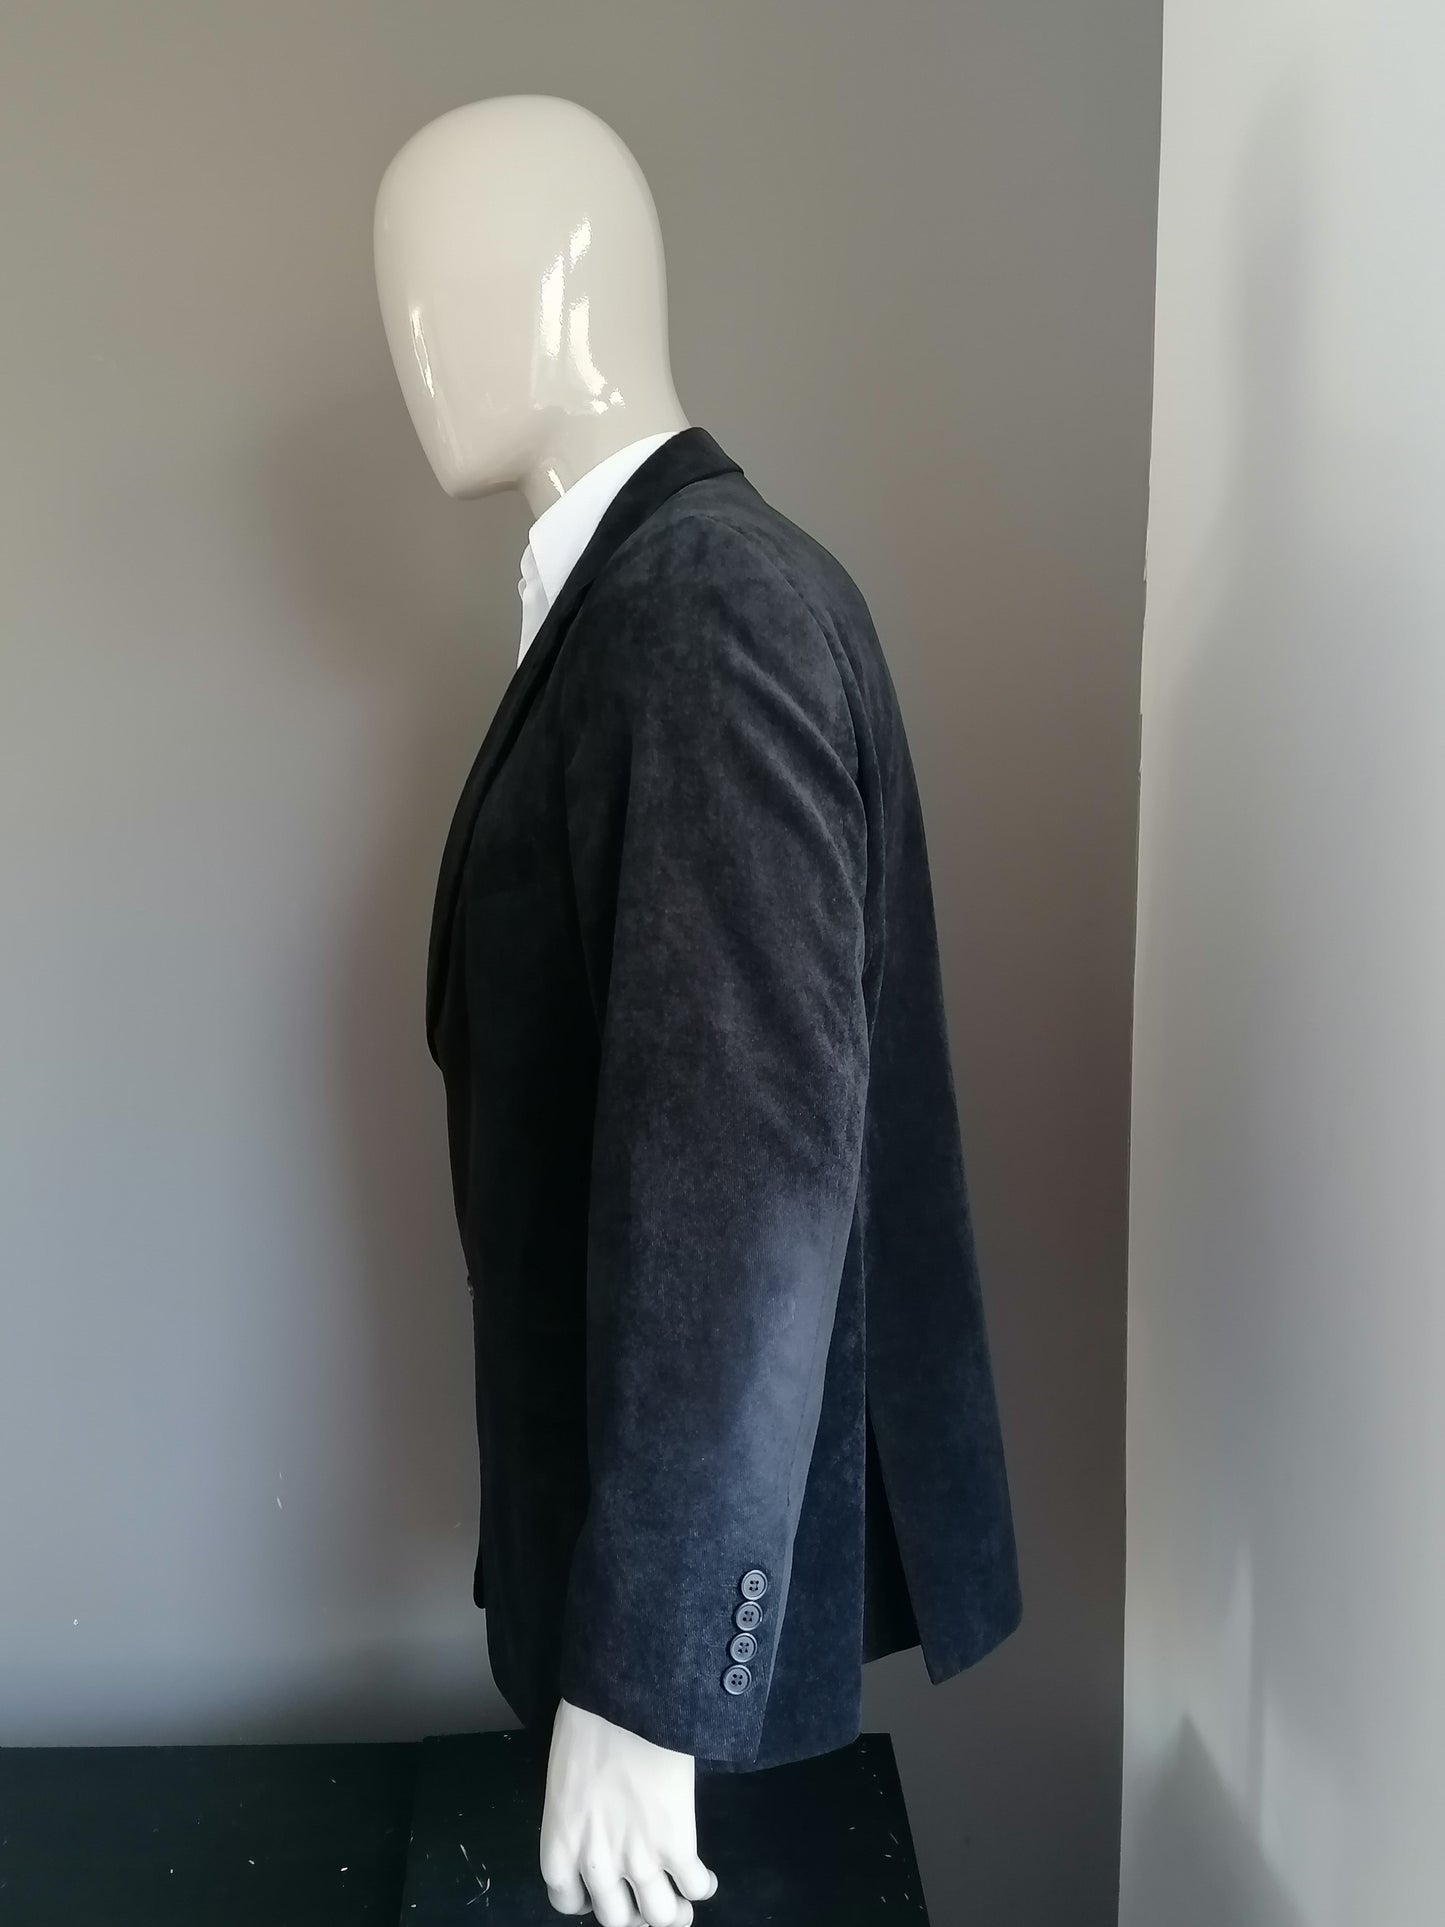 Authentic Rib jacket. Nice rib. Black colored. Size 27 (54).